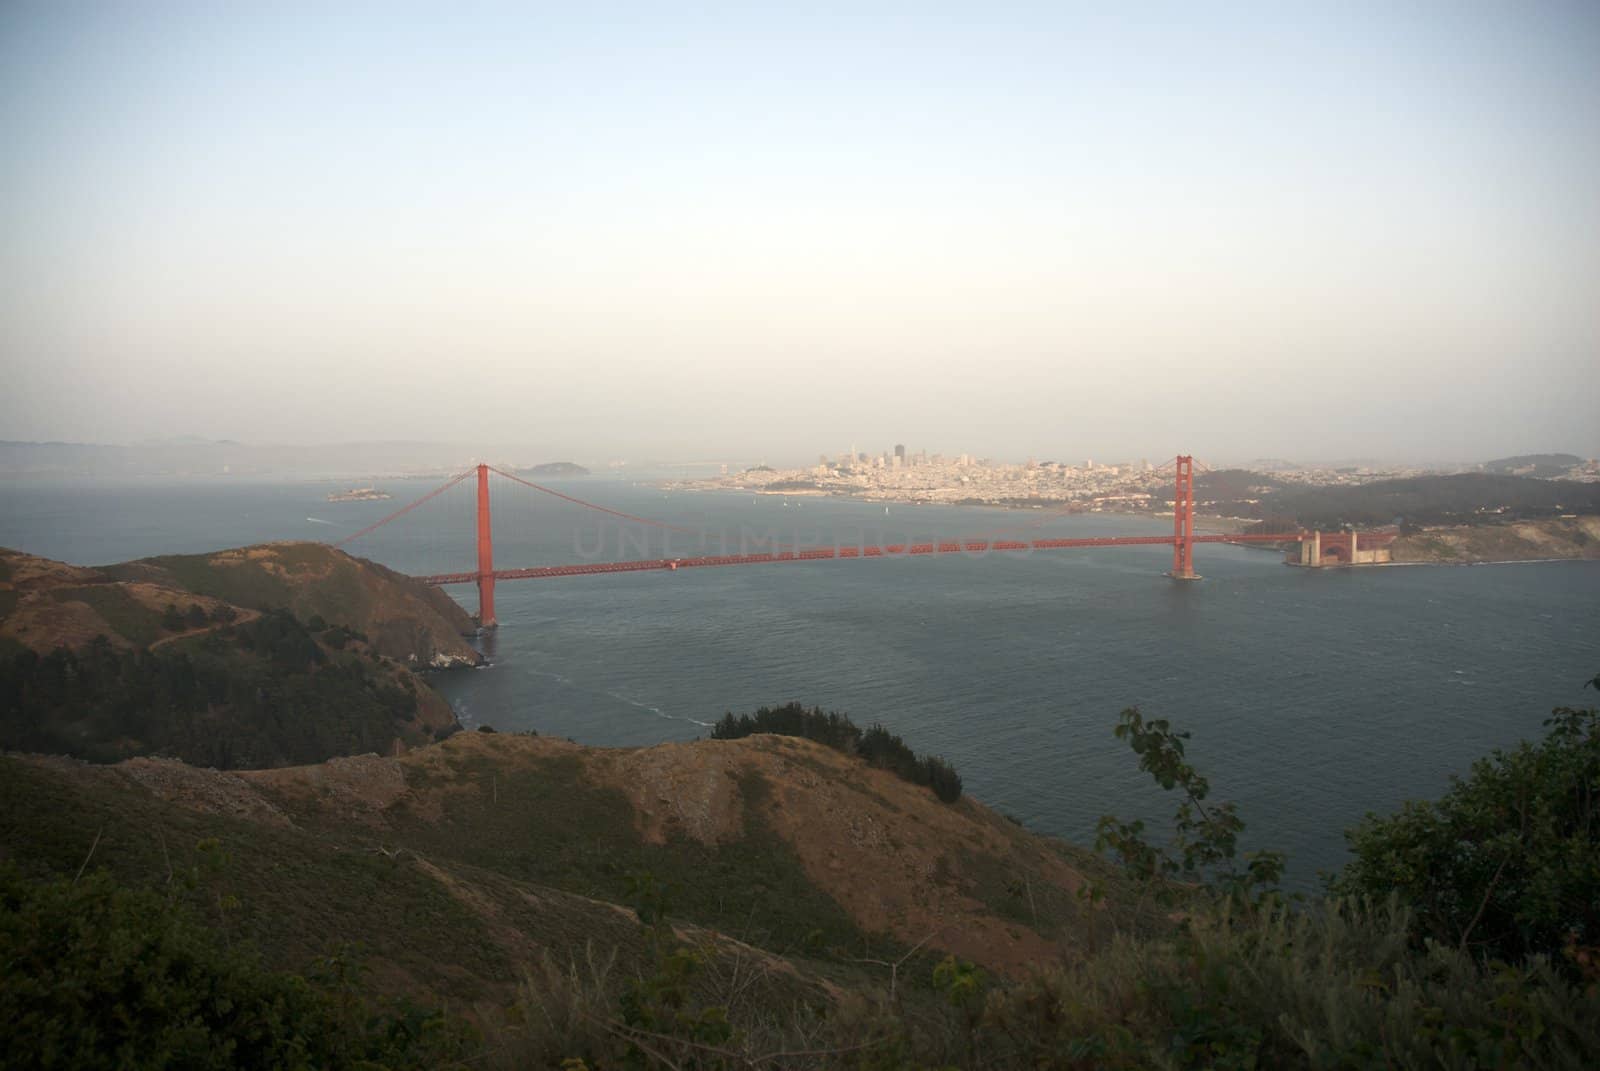 California, San Francisco, Golden Gate Bridge by jedphoto